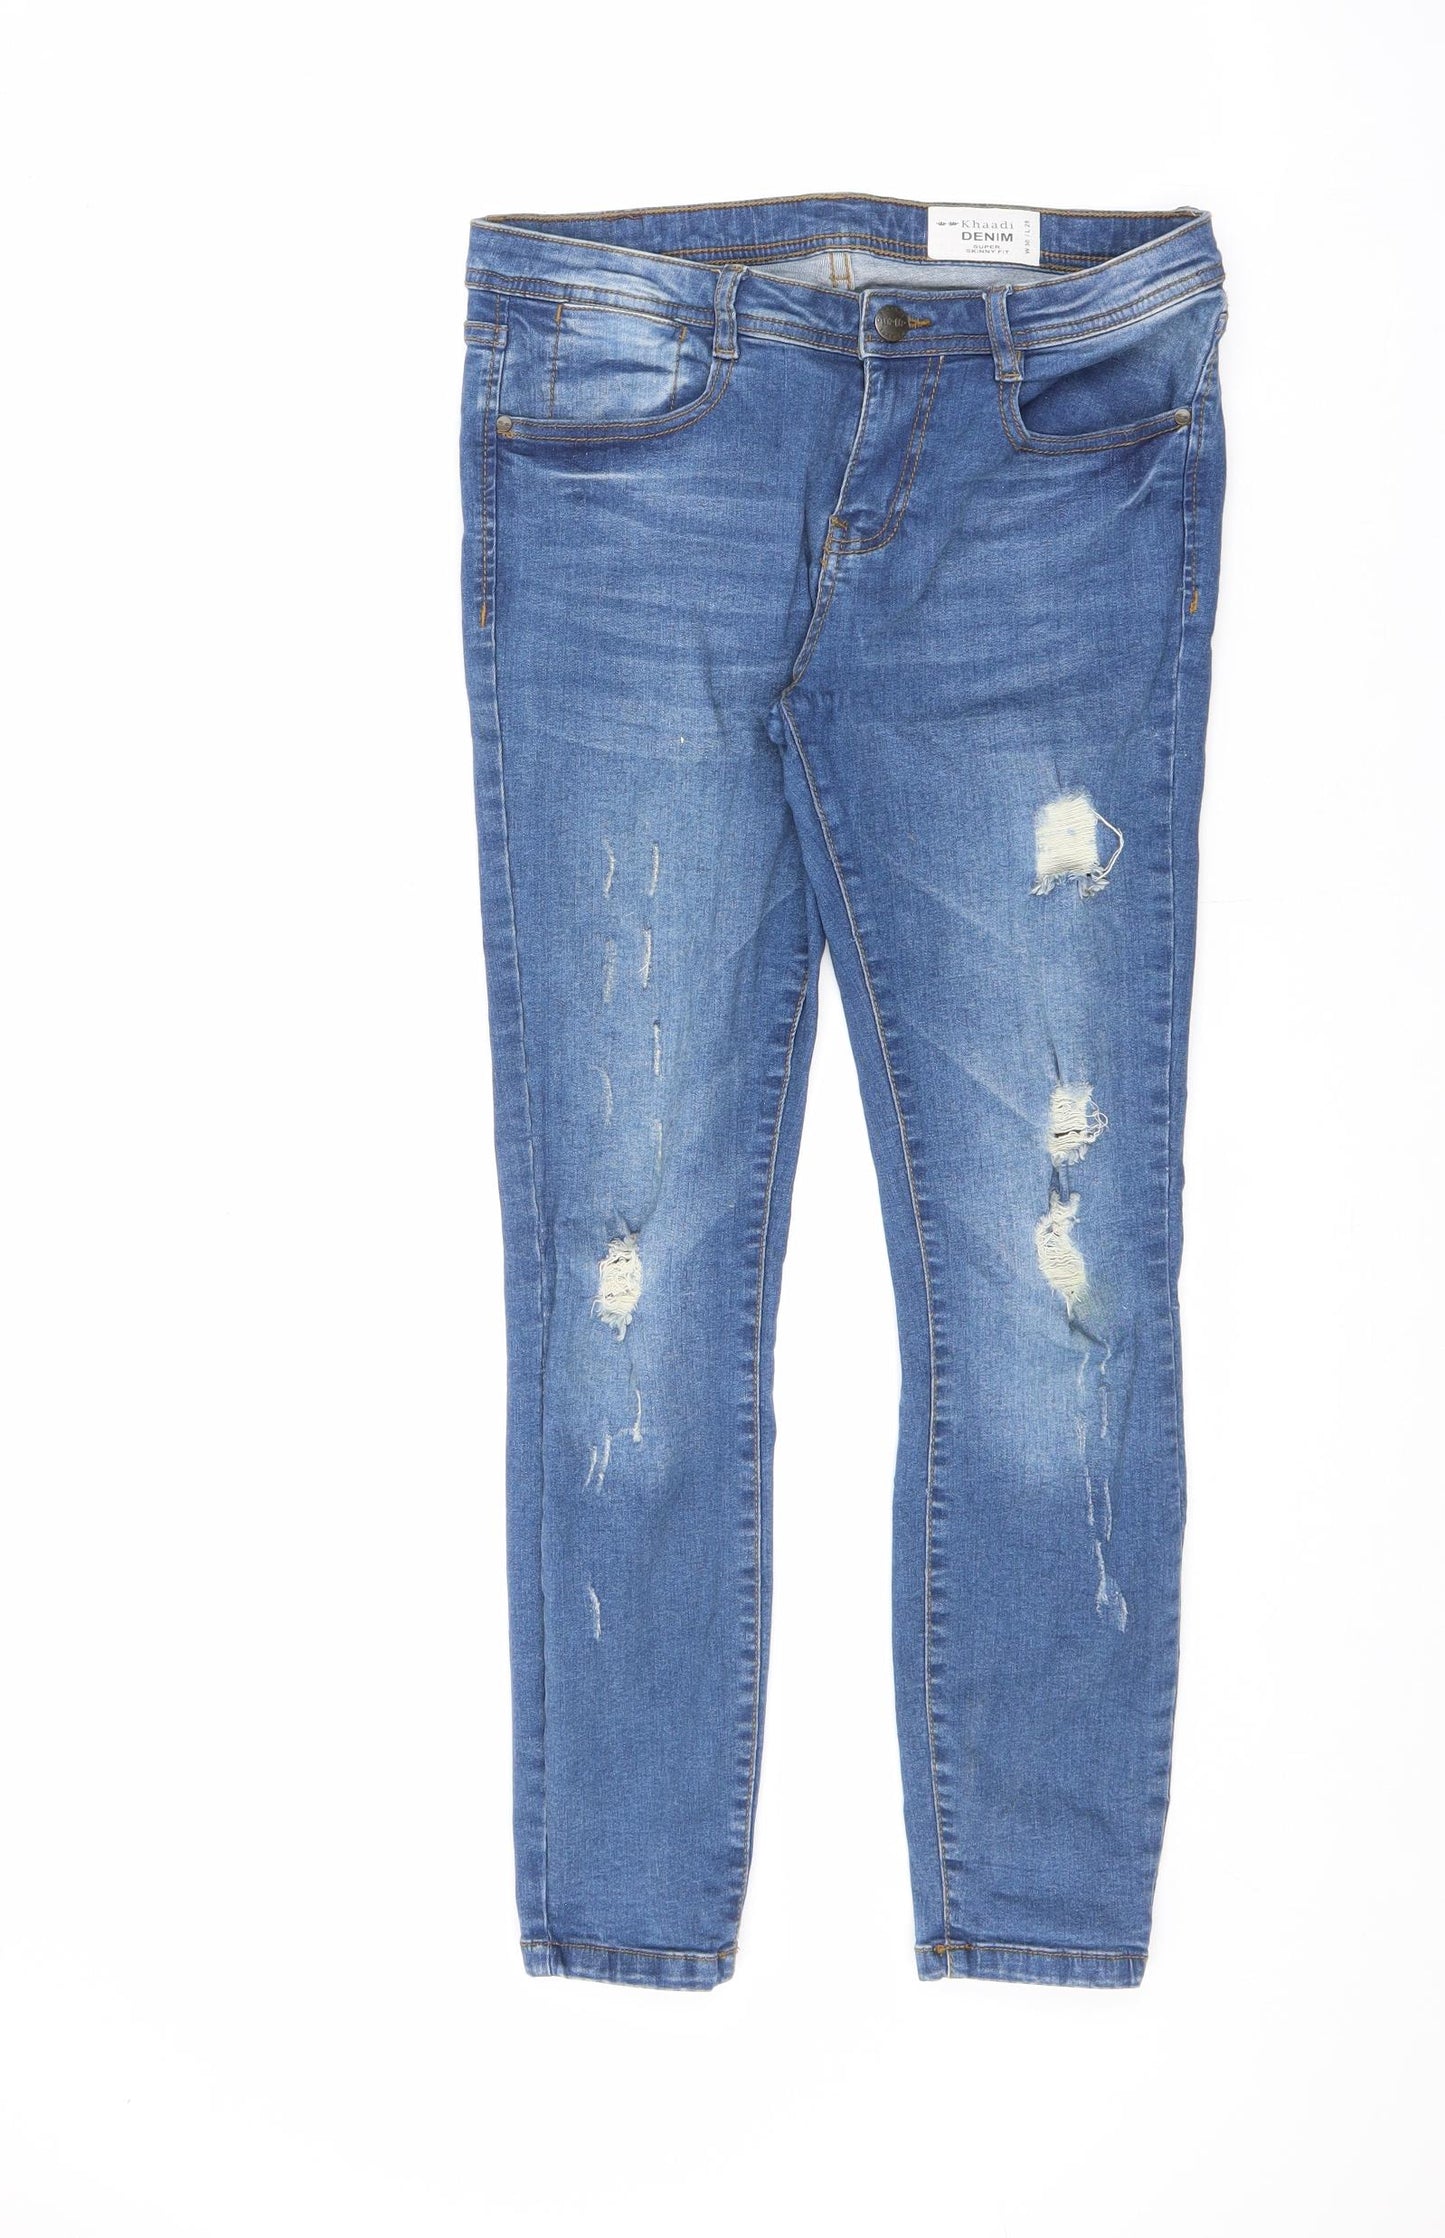 Khaadi Mens Blue Cotton Skinny Jeans Size 30 in L28 in Slim Zip